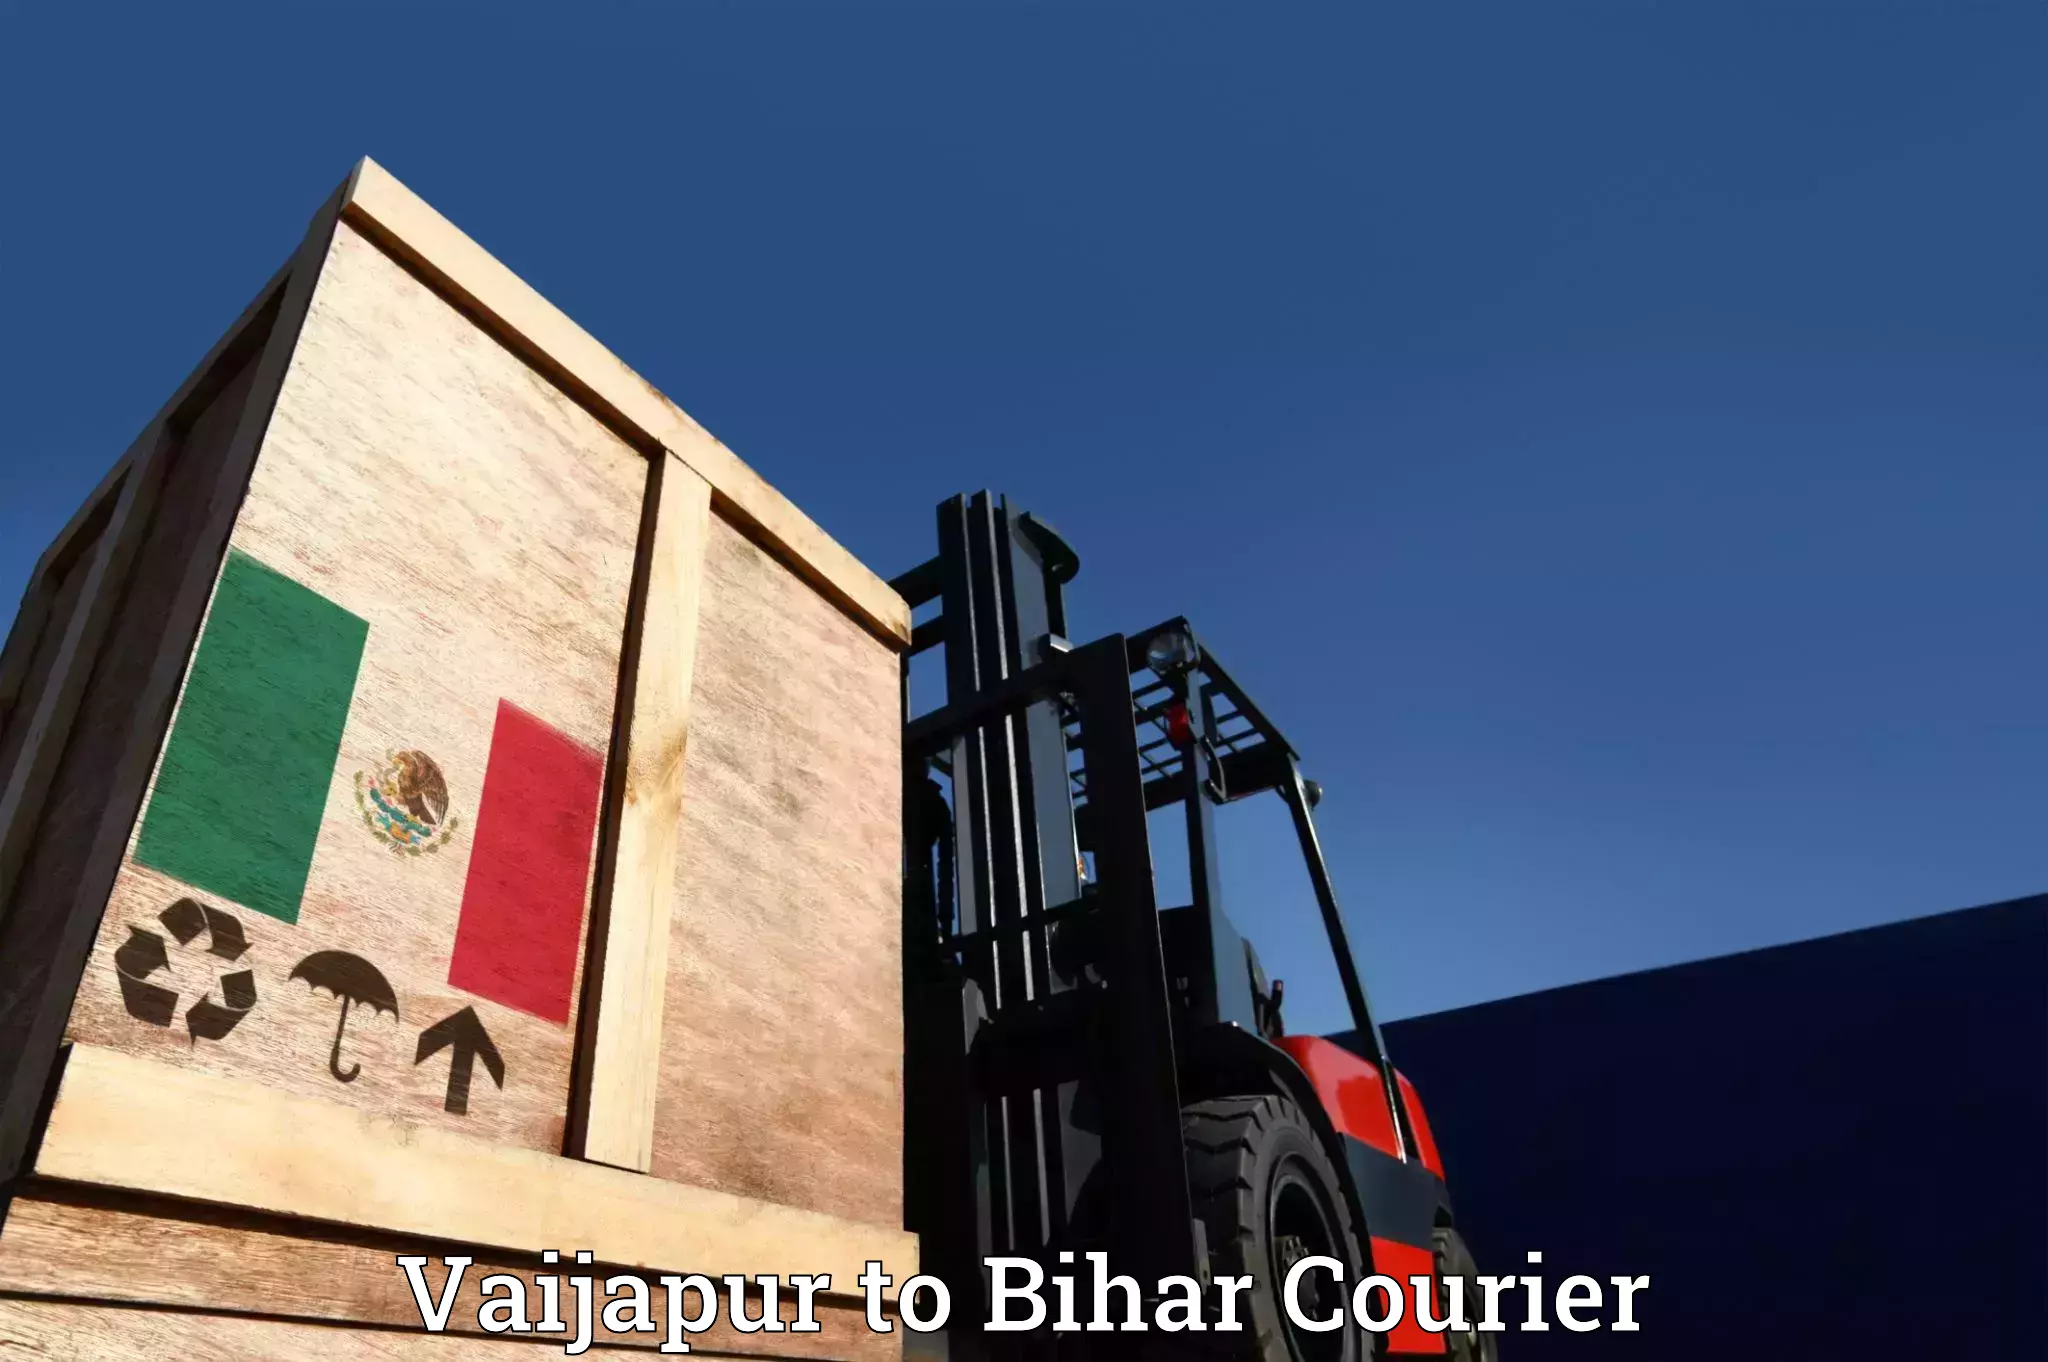 Furniture delivery service Vaijapur to Bihar